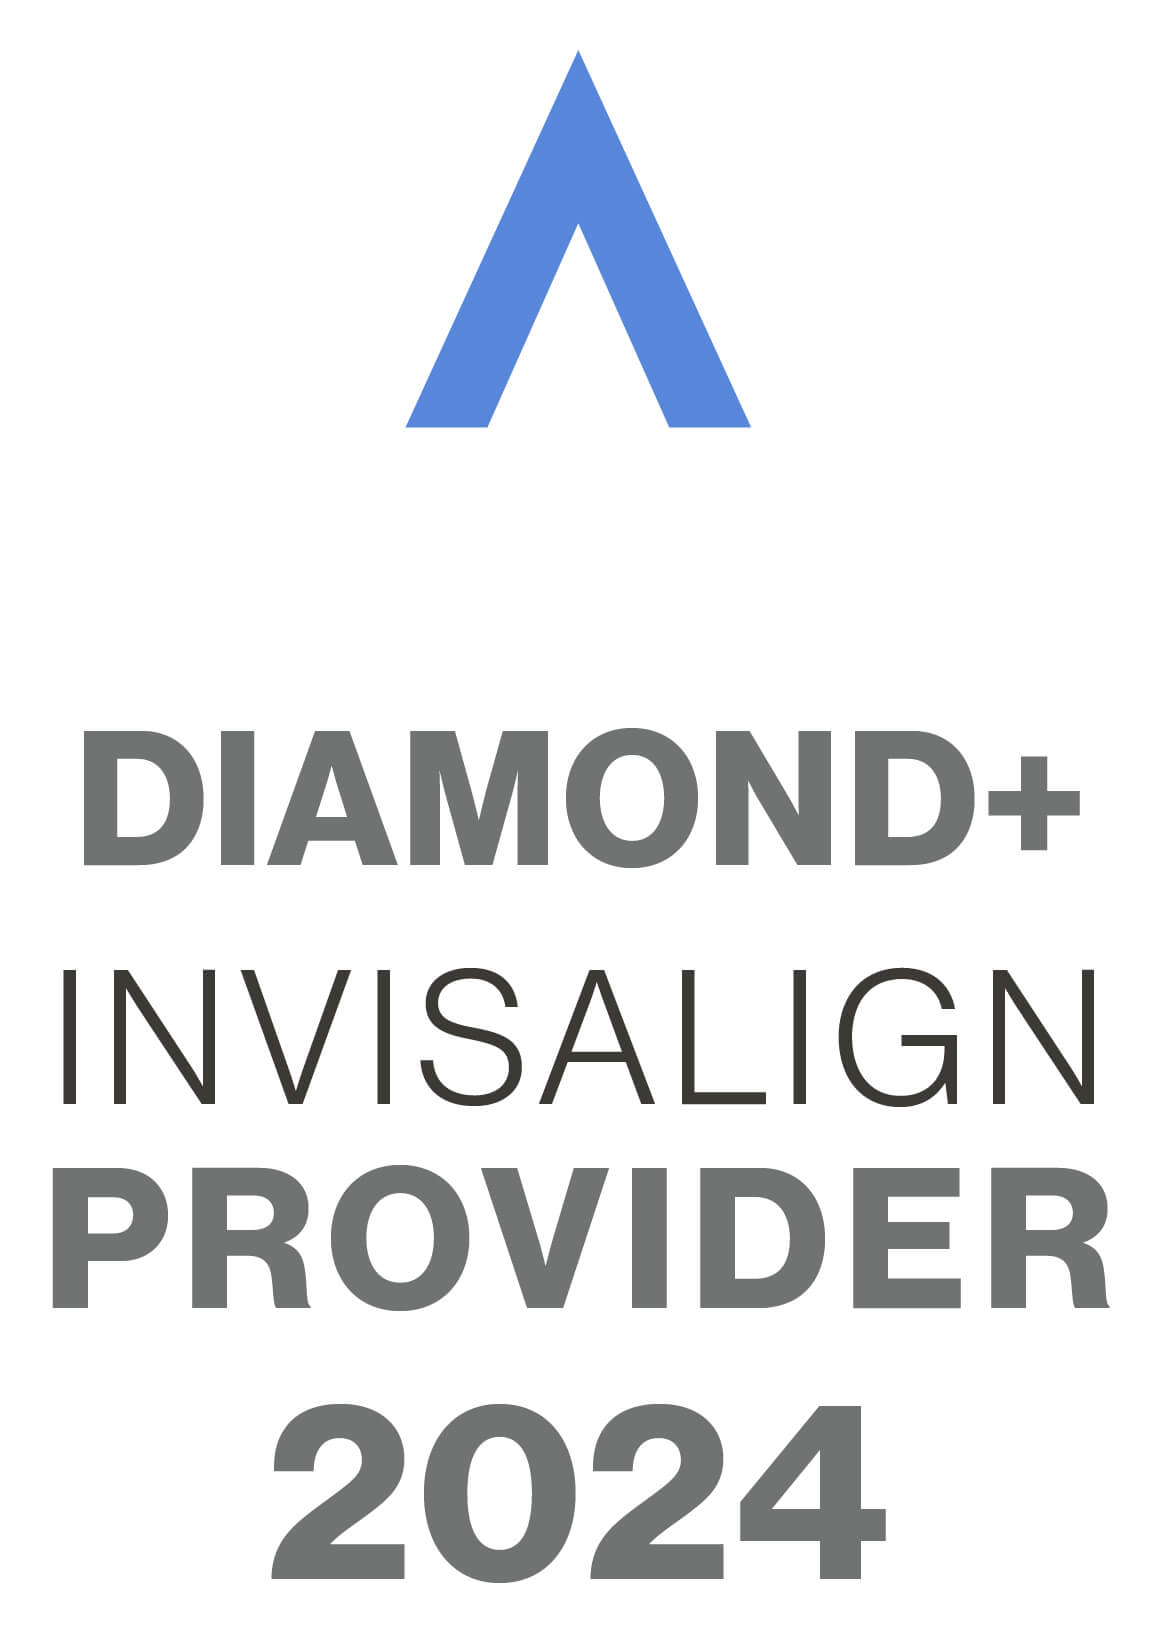 Diamond+ Invisalign Provider 2024